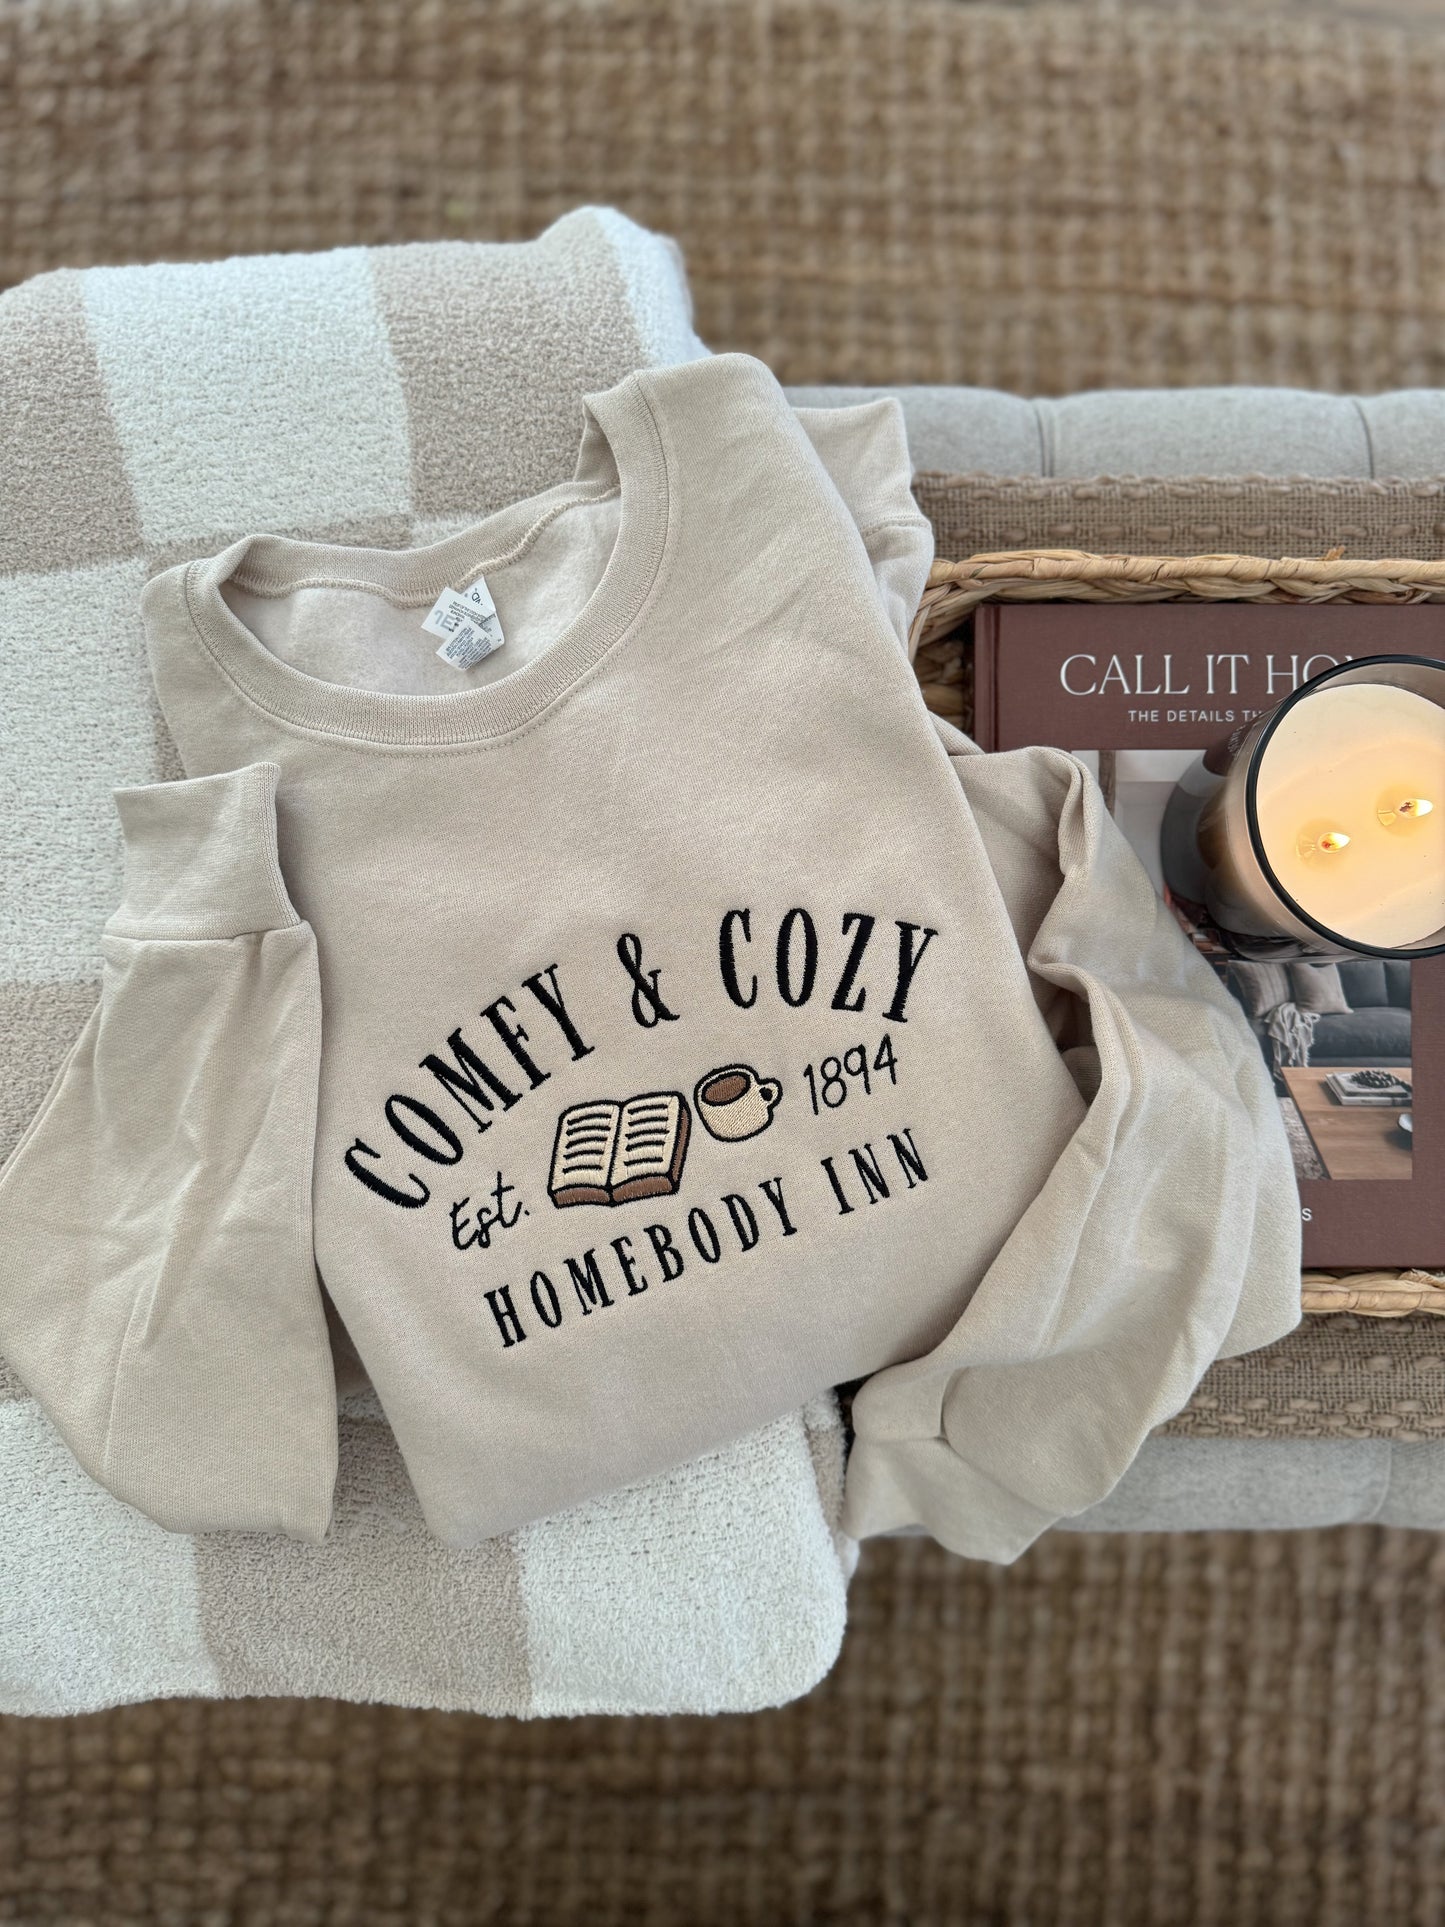 Comfy & Cozy | Homebody Inn Sweatshirt -- Embroidered Sweatshirt, Travel Sweatshirt, Gifts for Her